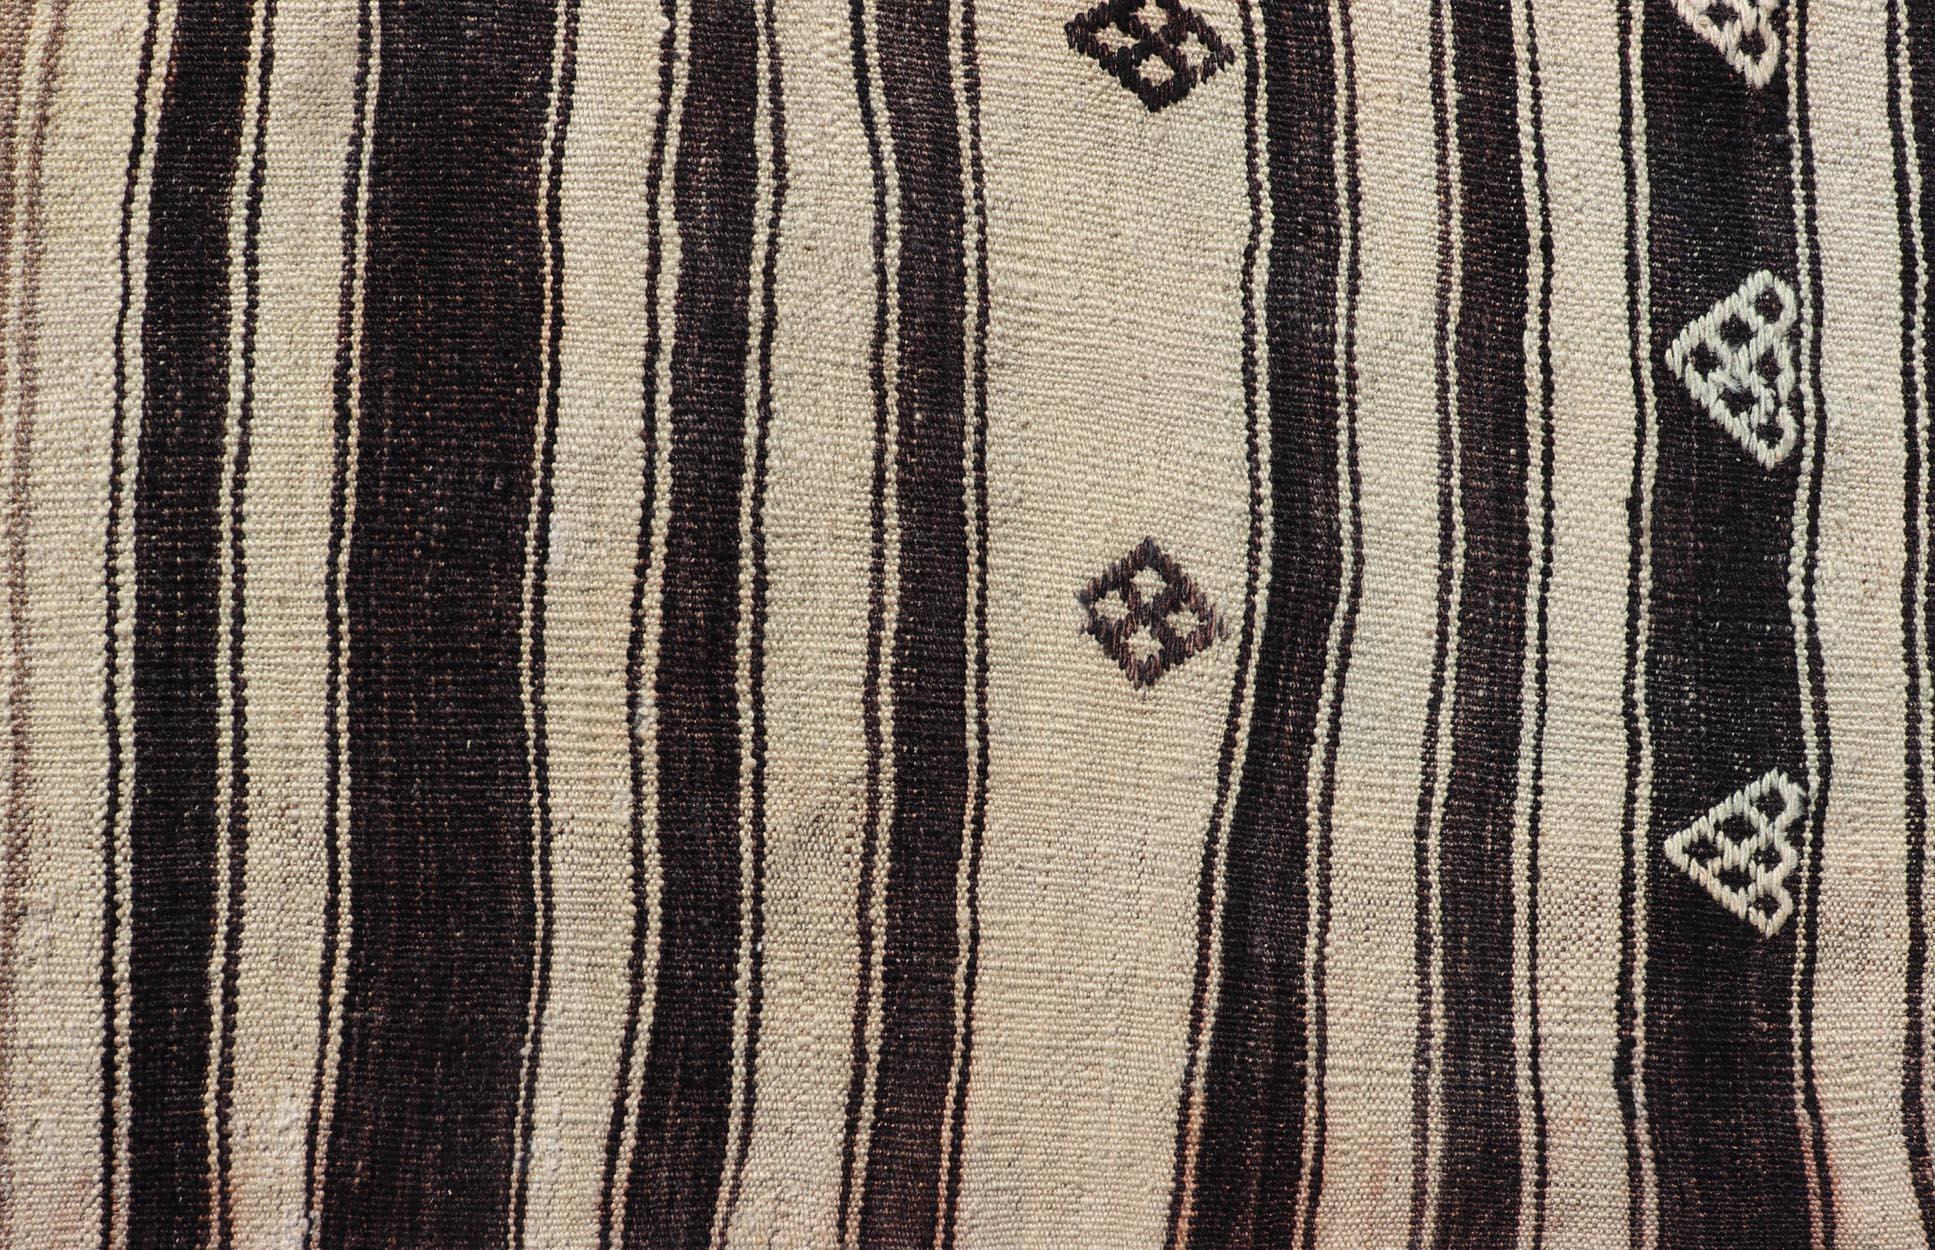 Measures: 2'11 x 4'10 
Stripe Design Turkish Vintage Flat-Weave Rug in Dark Brown, Taupe, and Cream. Keivan Woven Arts / rug KBE-221103, country of origin / type: Turkey / Kilim, circa 1950
This vintage flat-woven Kilim features a minimalist design